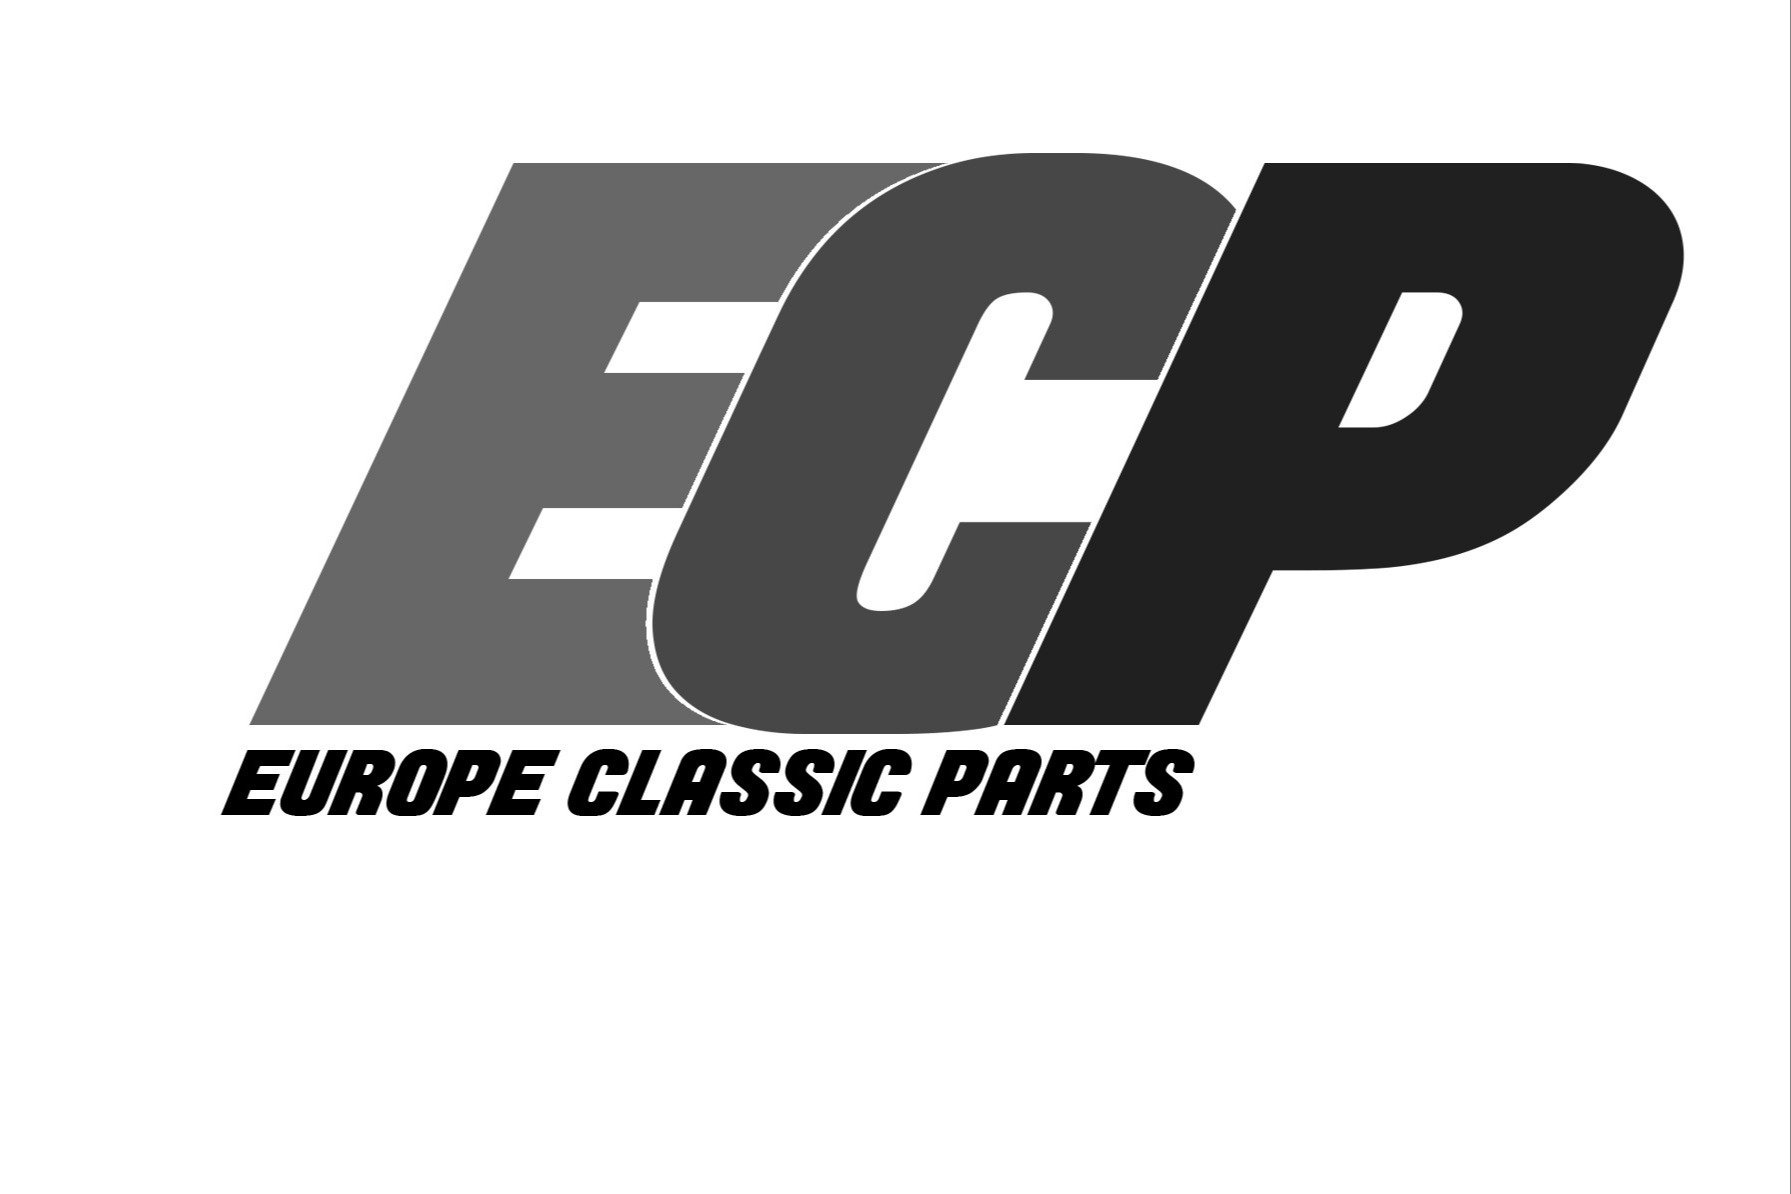 Europe Classic Parts